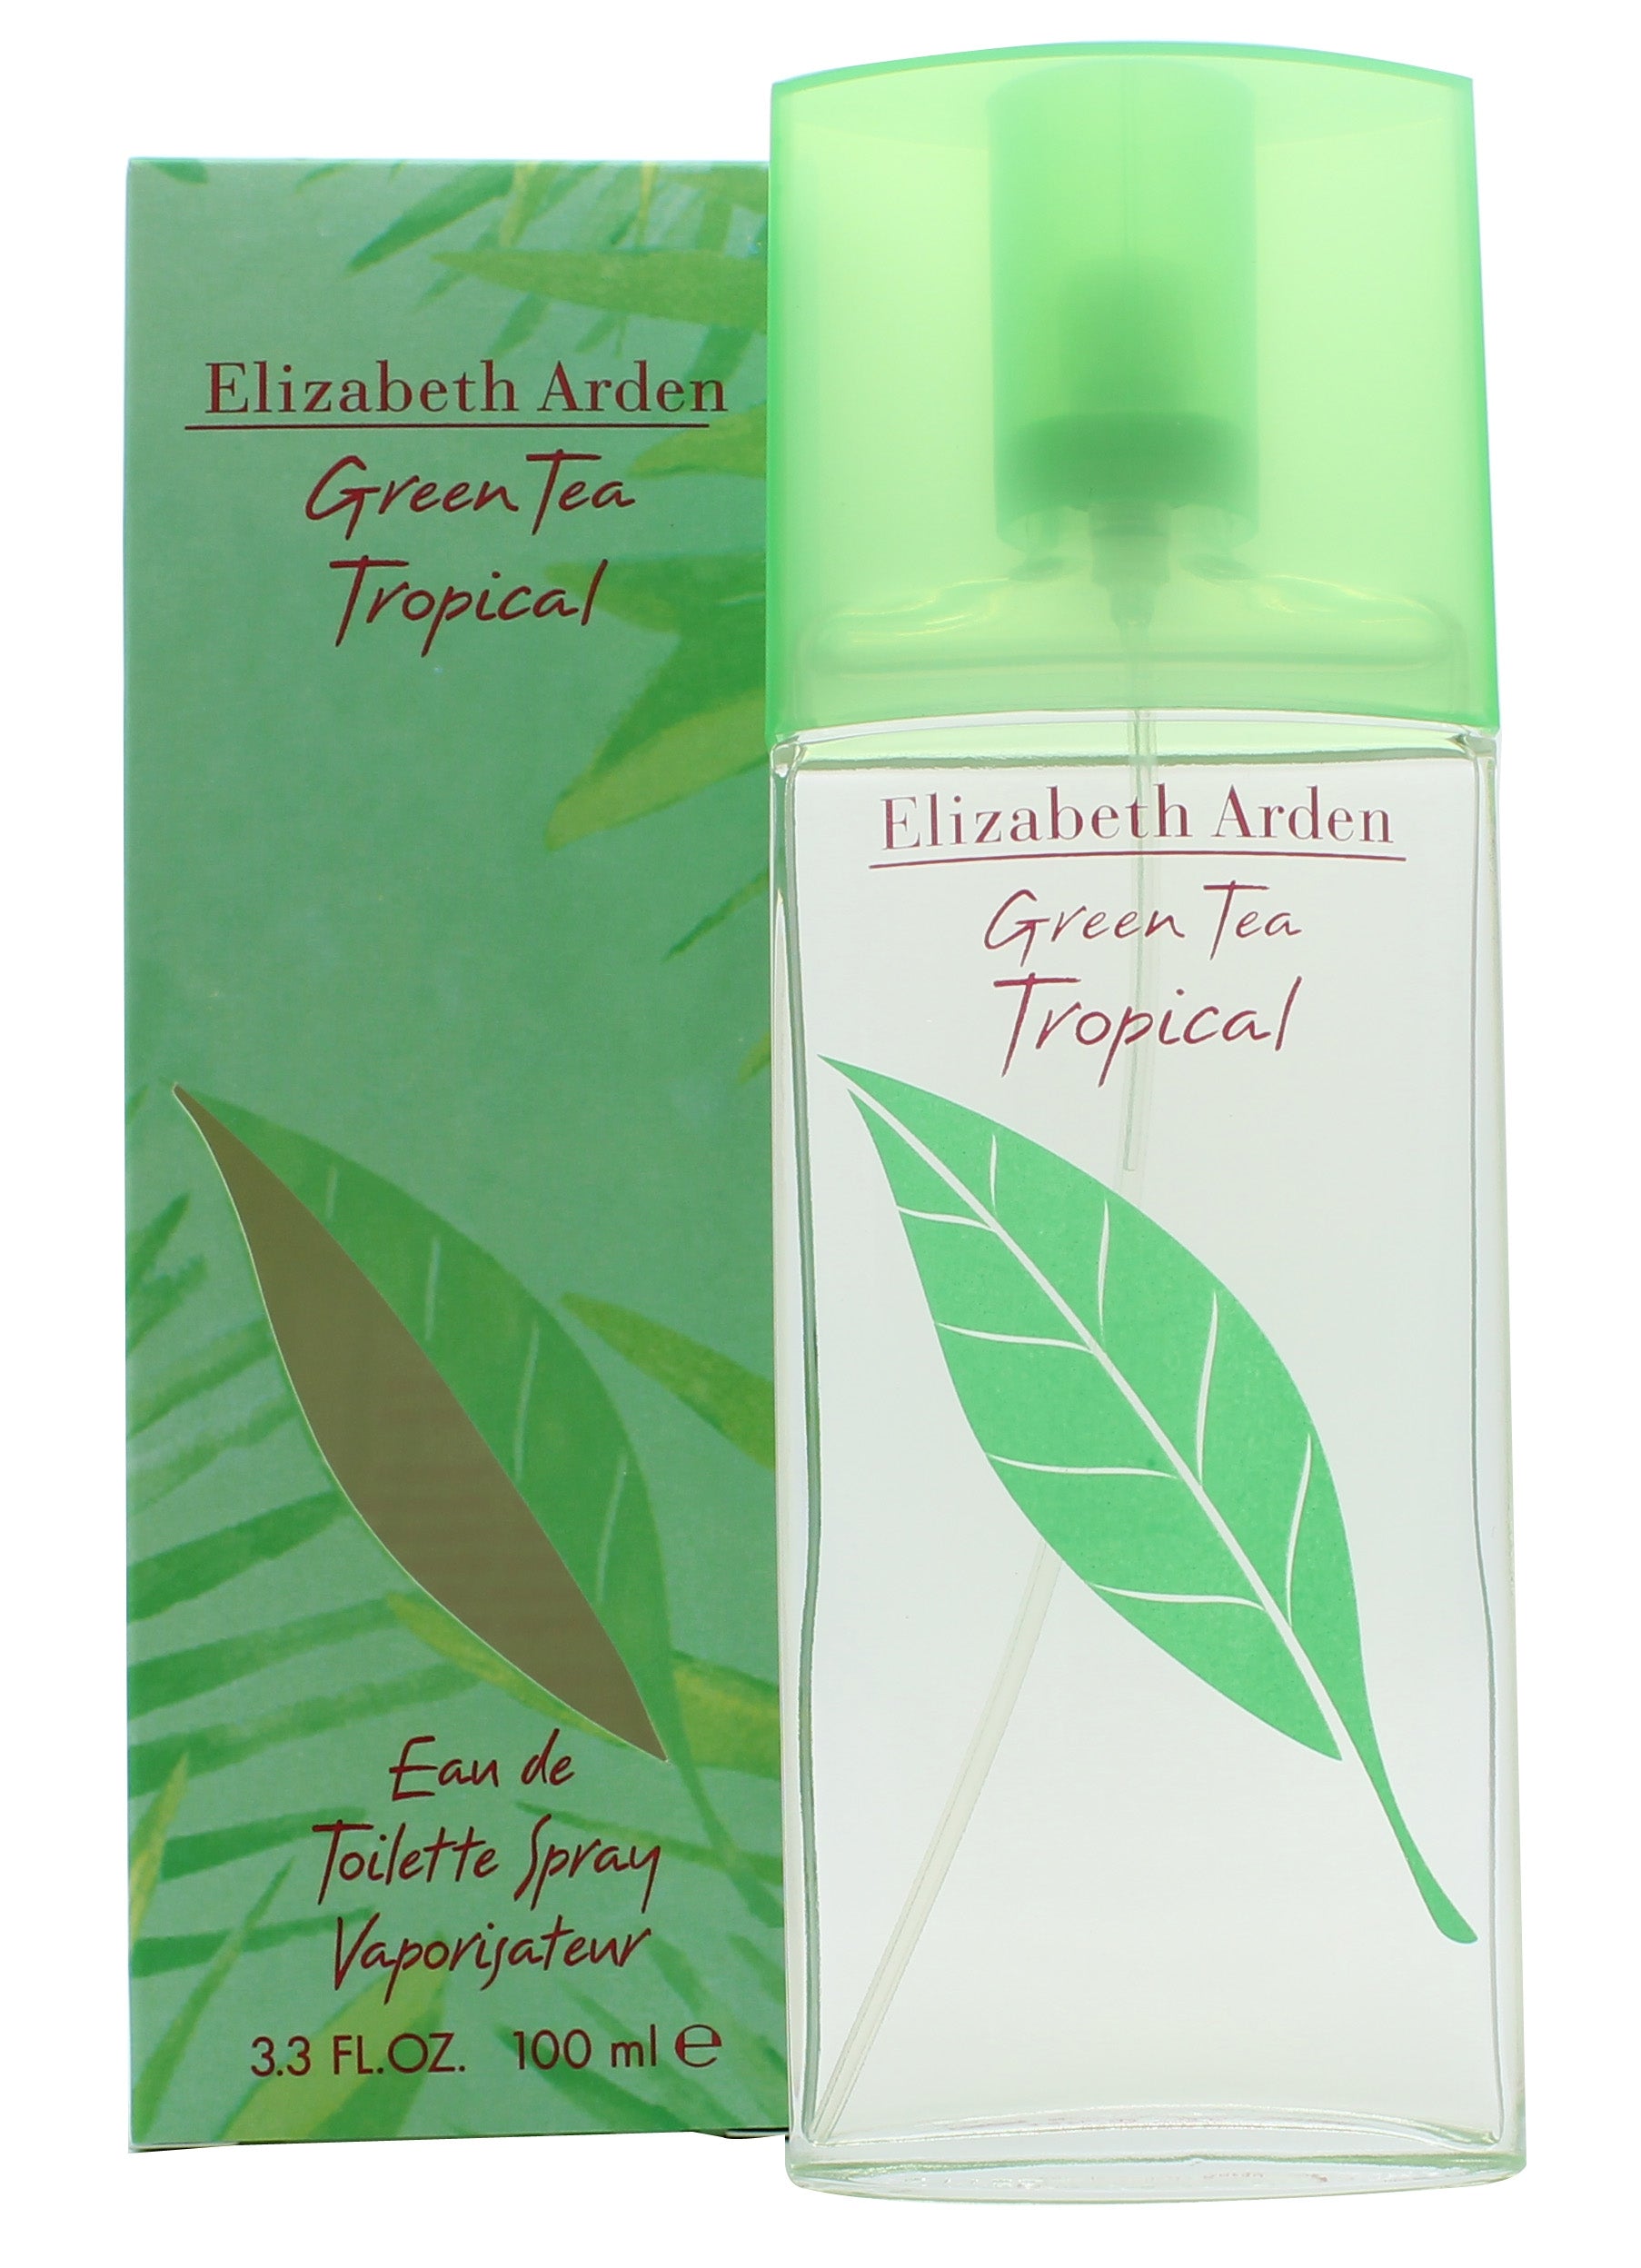 View Elizabeth Arden Green Tea Tropical Eau de Toilette 100ml Spray information